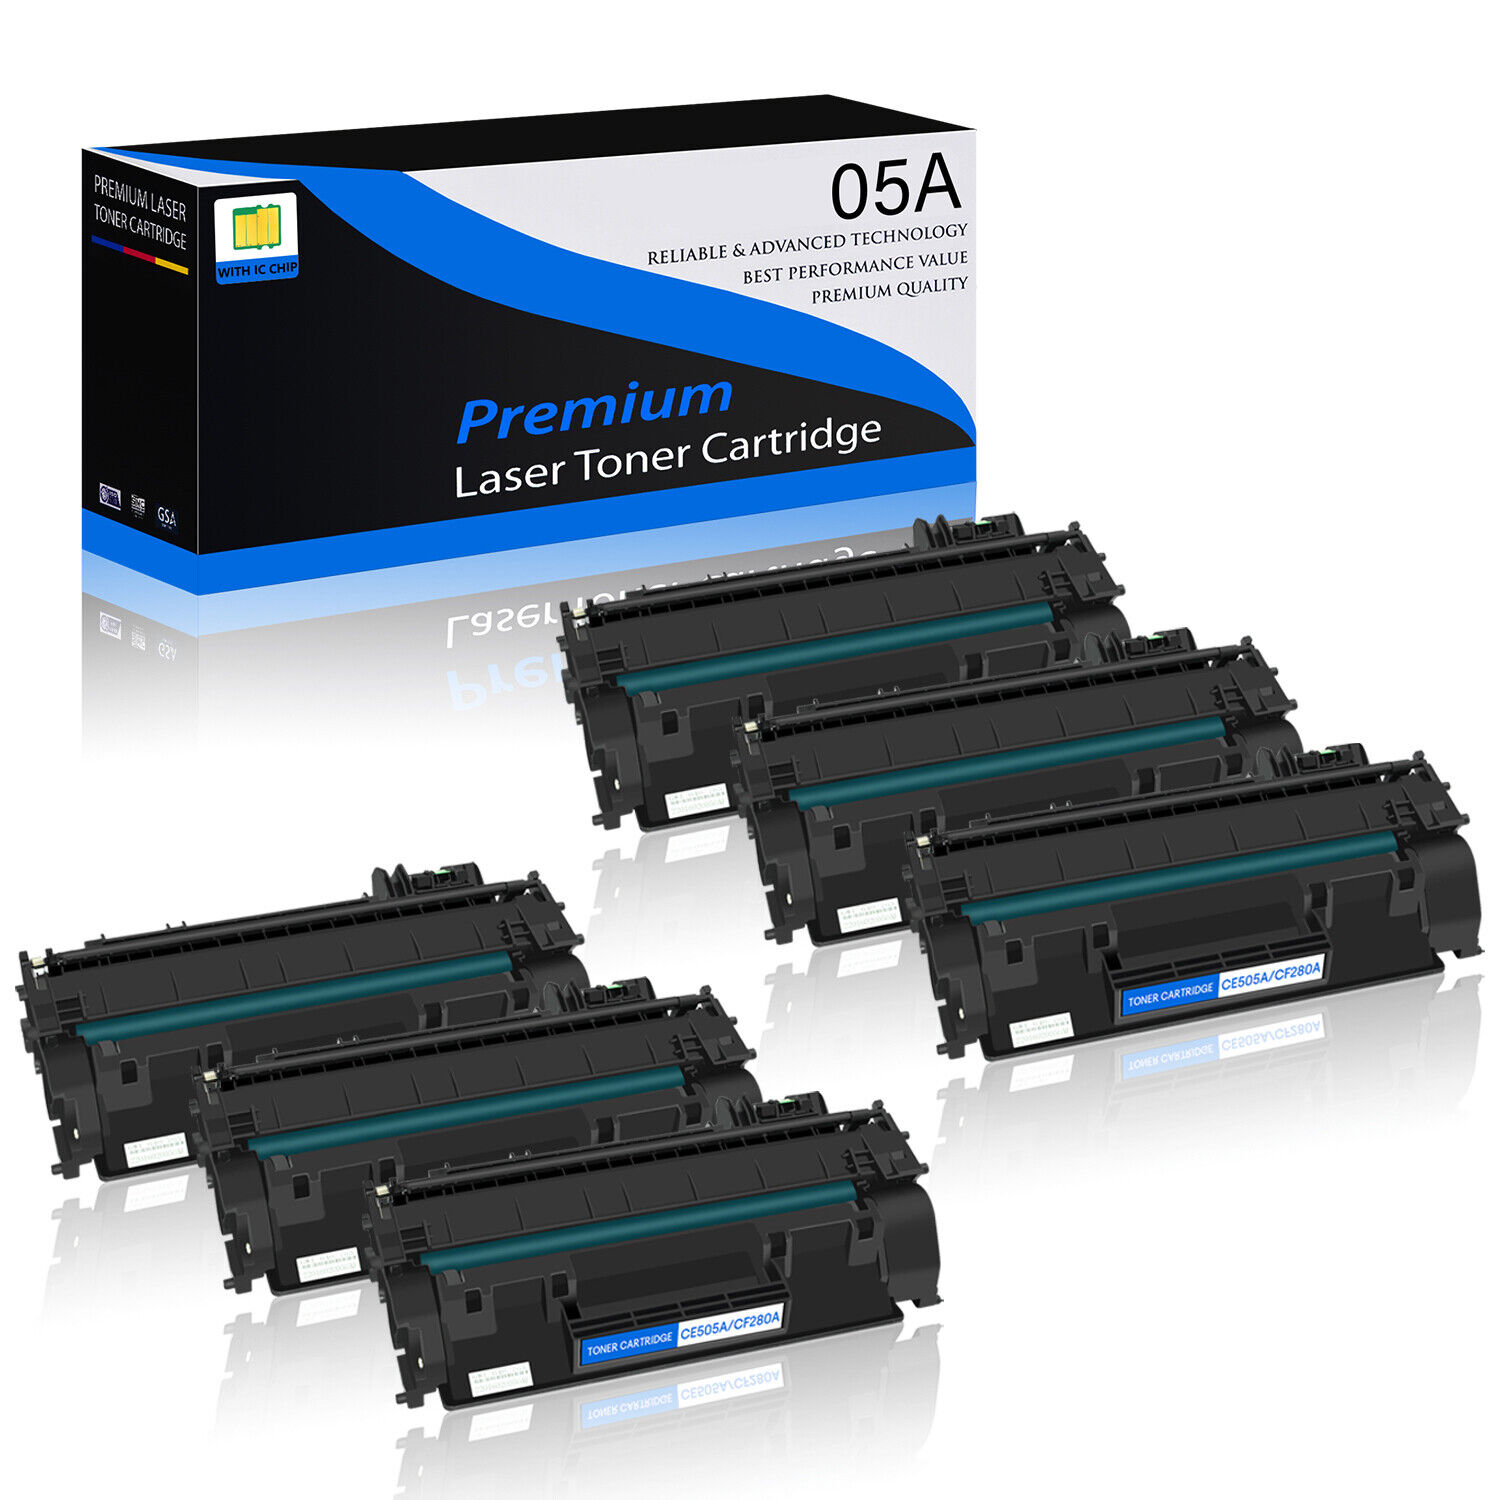 6 PACK CE505A 05A Toner Cartridge for HP LaserJet P2030 P2035 P2035n P2050